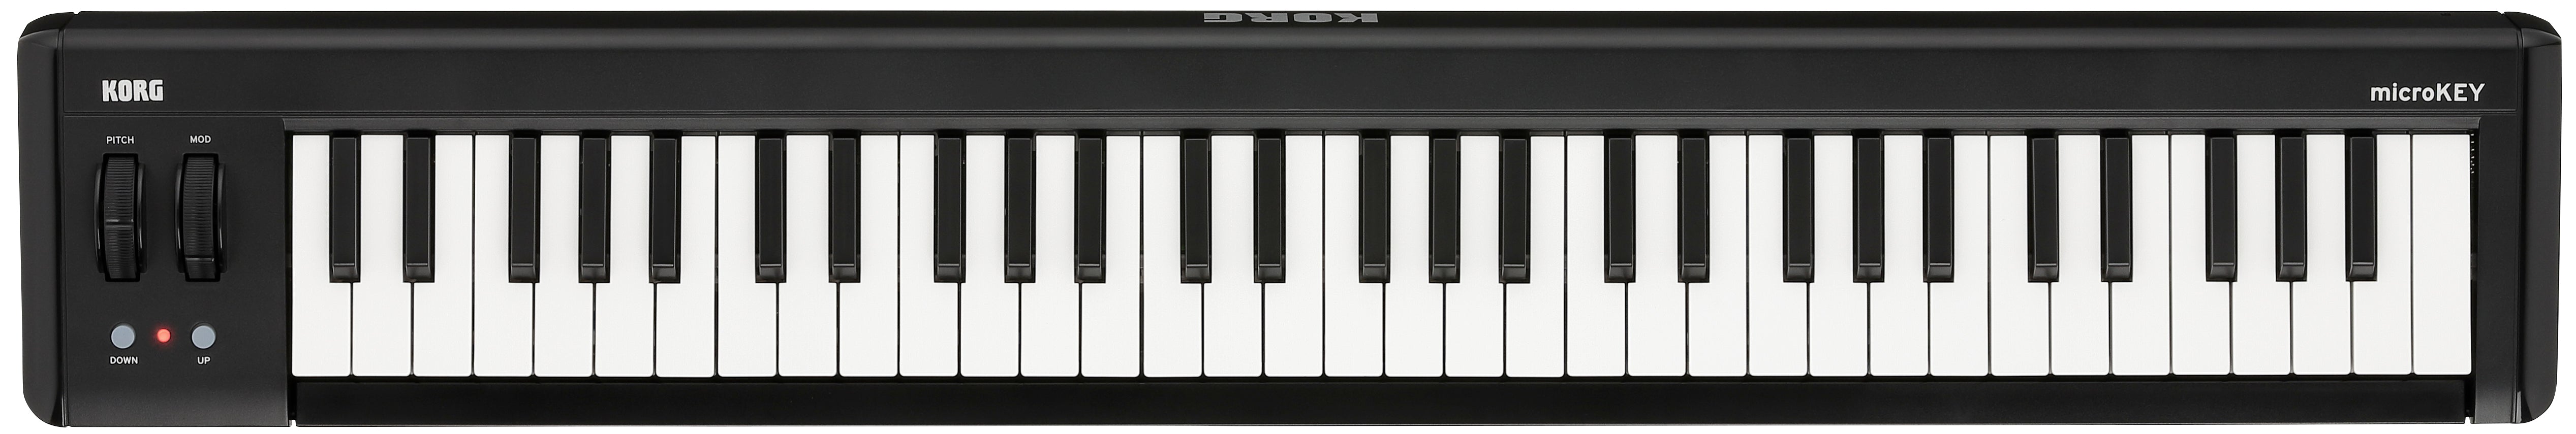 microKEY-61 Key - Keyboard Controller